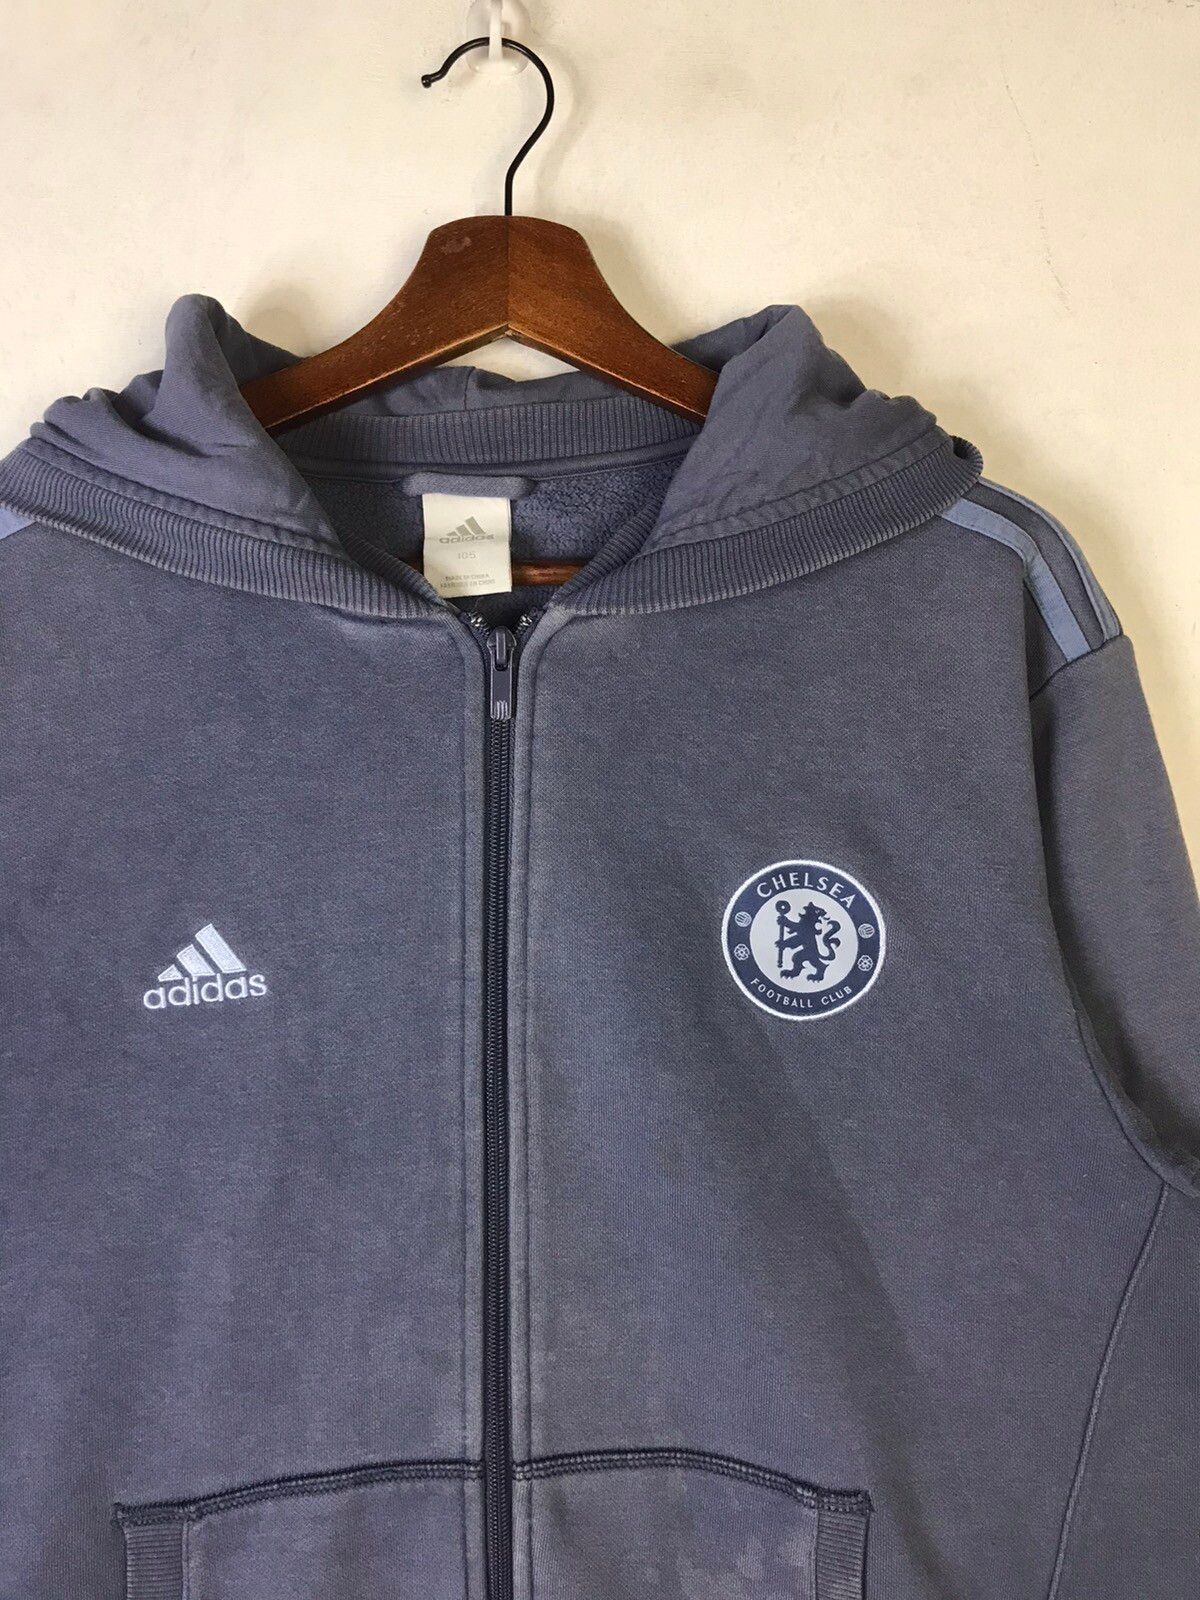 Adidas Adidas x Chelsea FC Zipper Hoodie Sweater Size US M / EU 48-50 / 2 - 3 Thumbnail